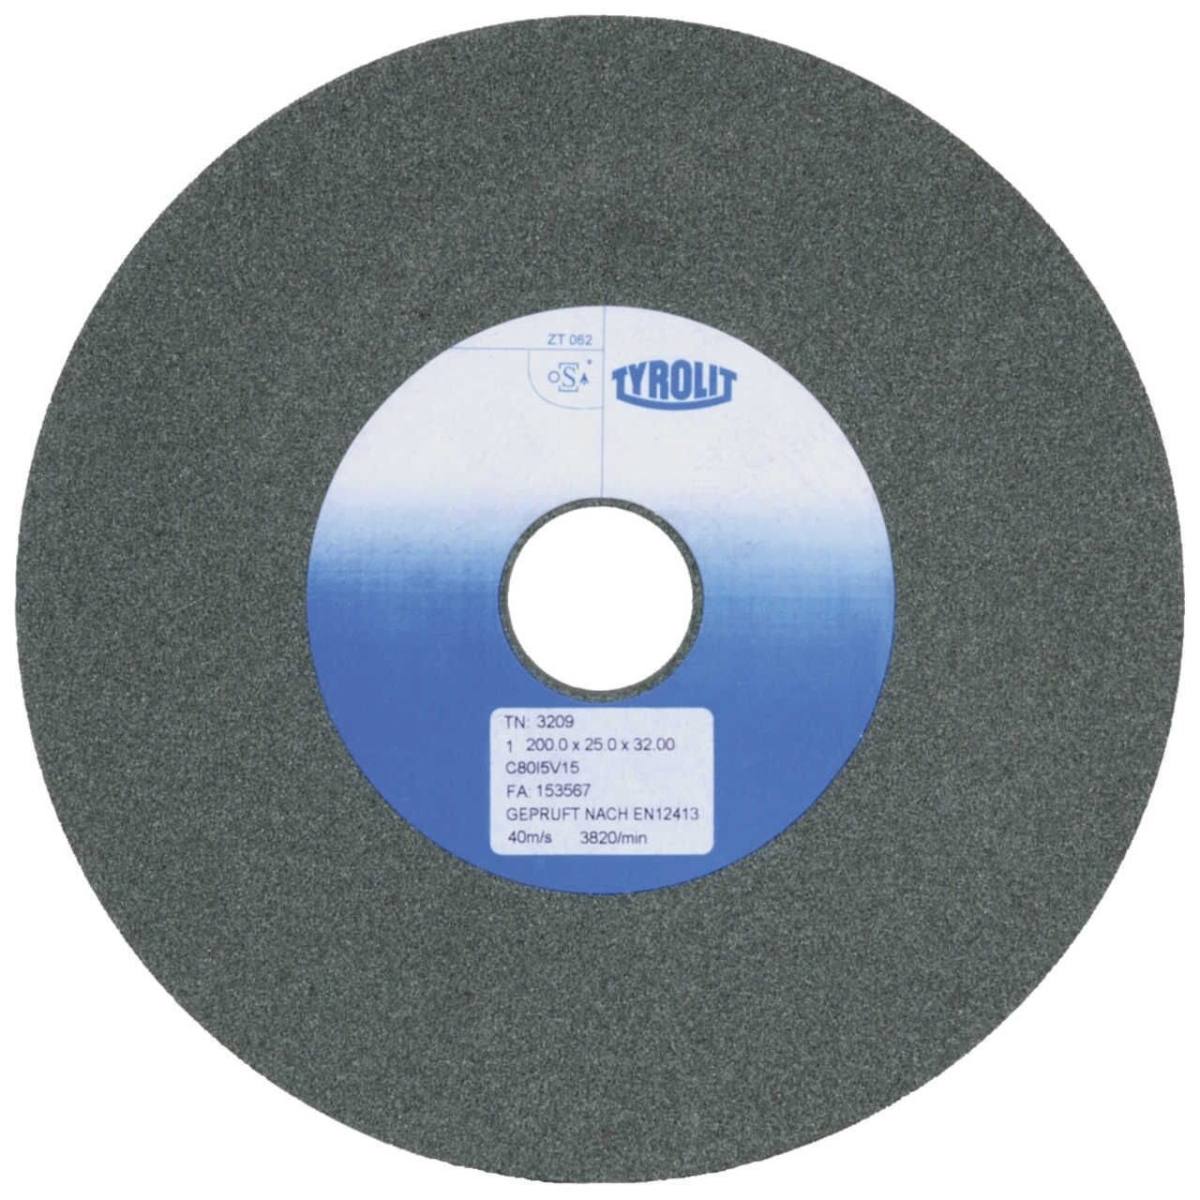 TYROLIT discos de desbaste cerámicos convencionales DxDxH 200x32x51 Para metales no férricos, forma: 1, Art. 34287491